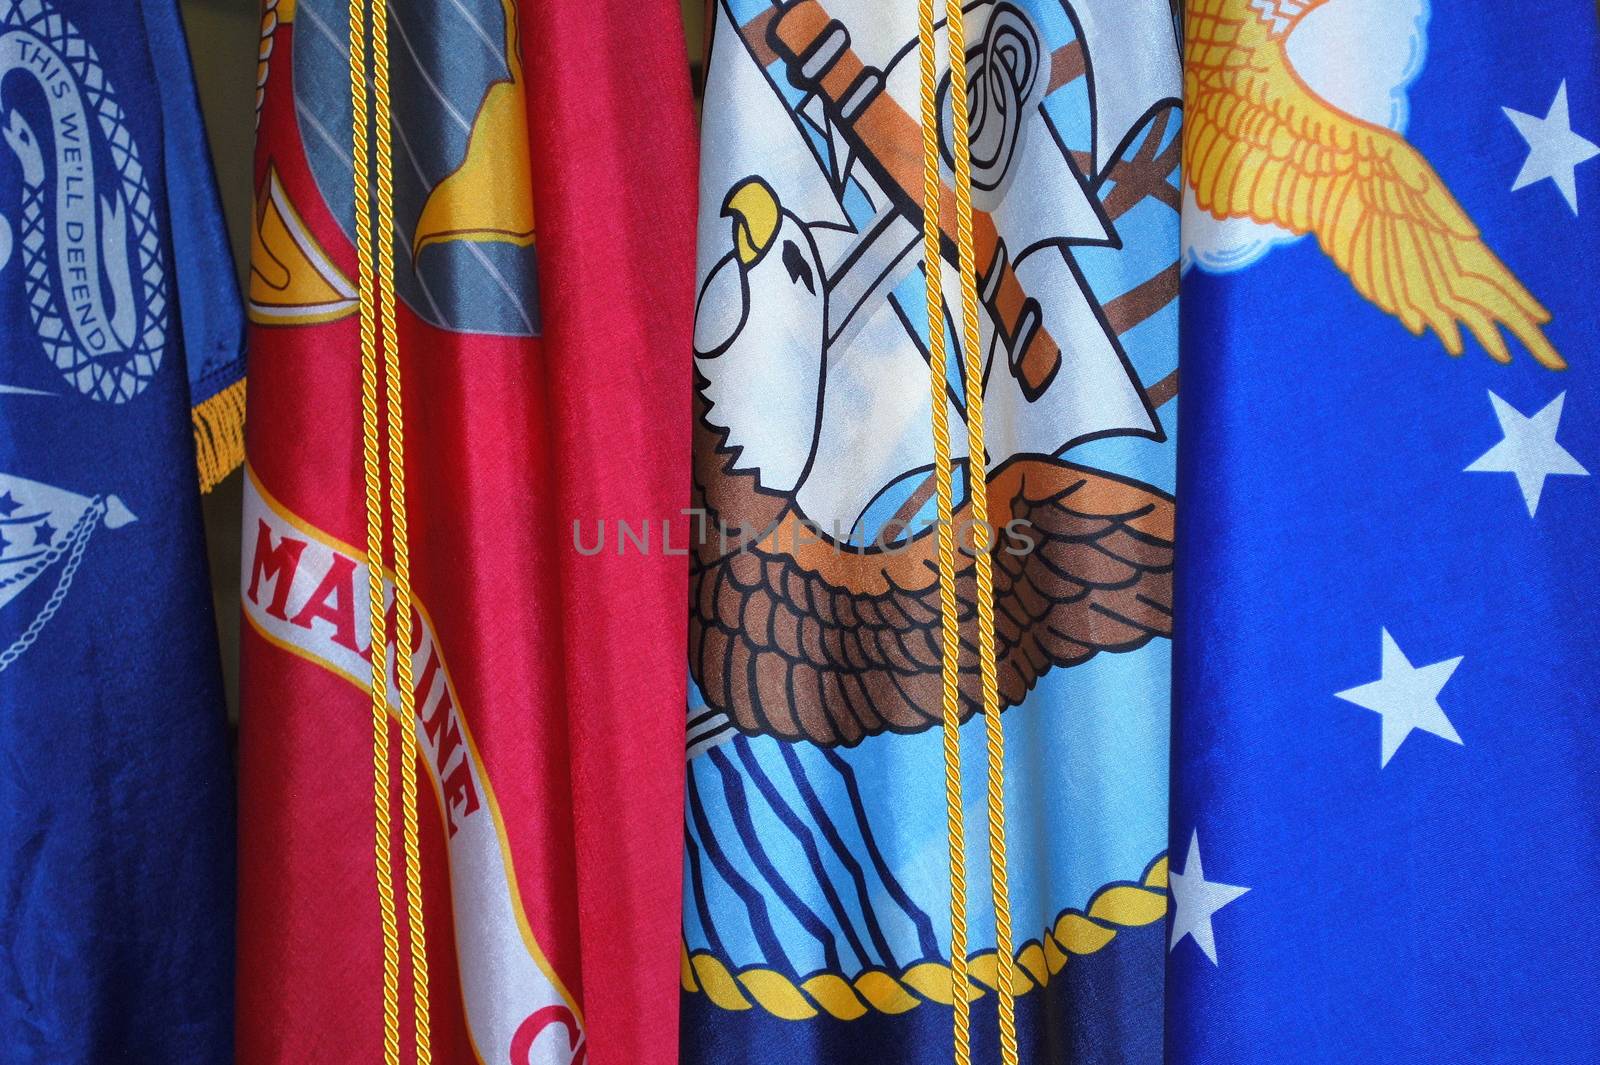 Military flags. by oscarcwilliams